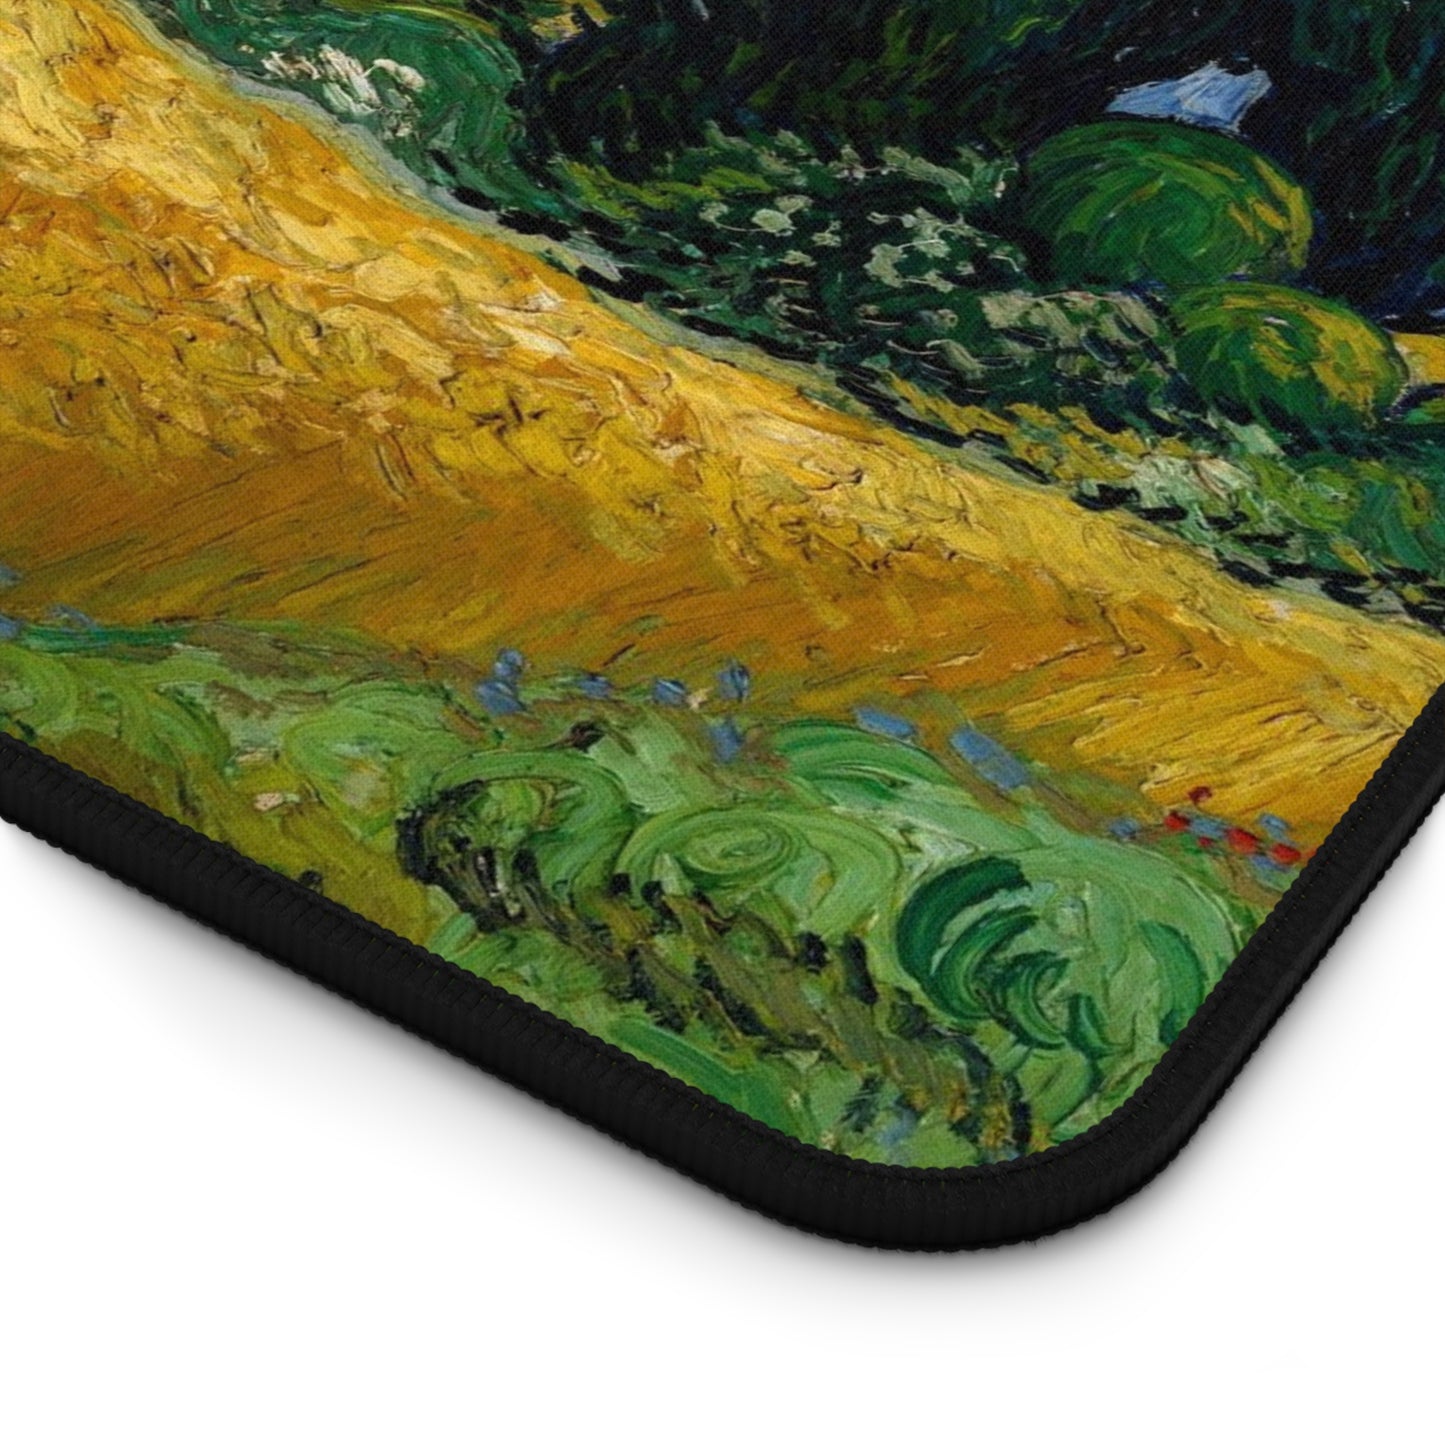 Wheat Fields by Vincent Van Gogh - Desk Mat